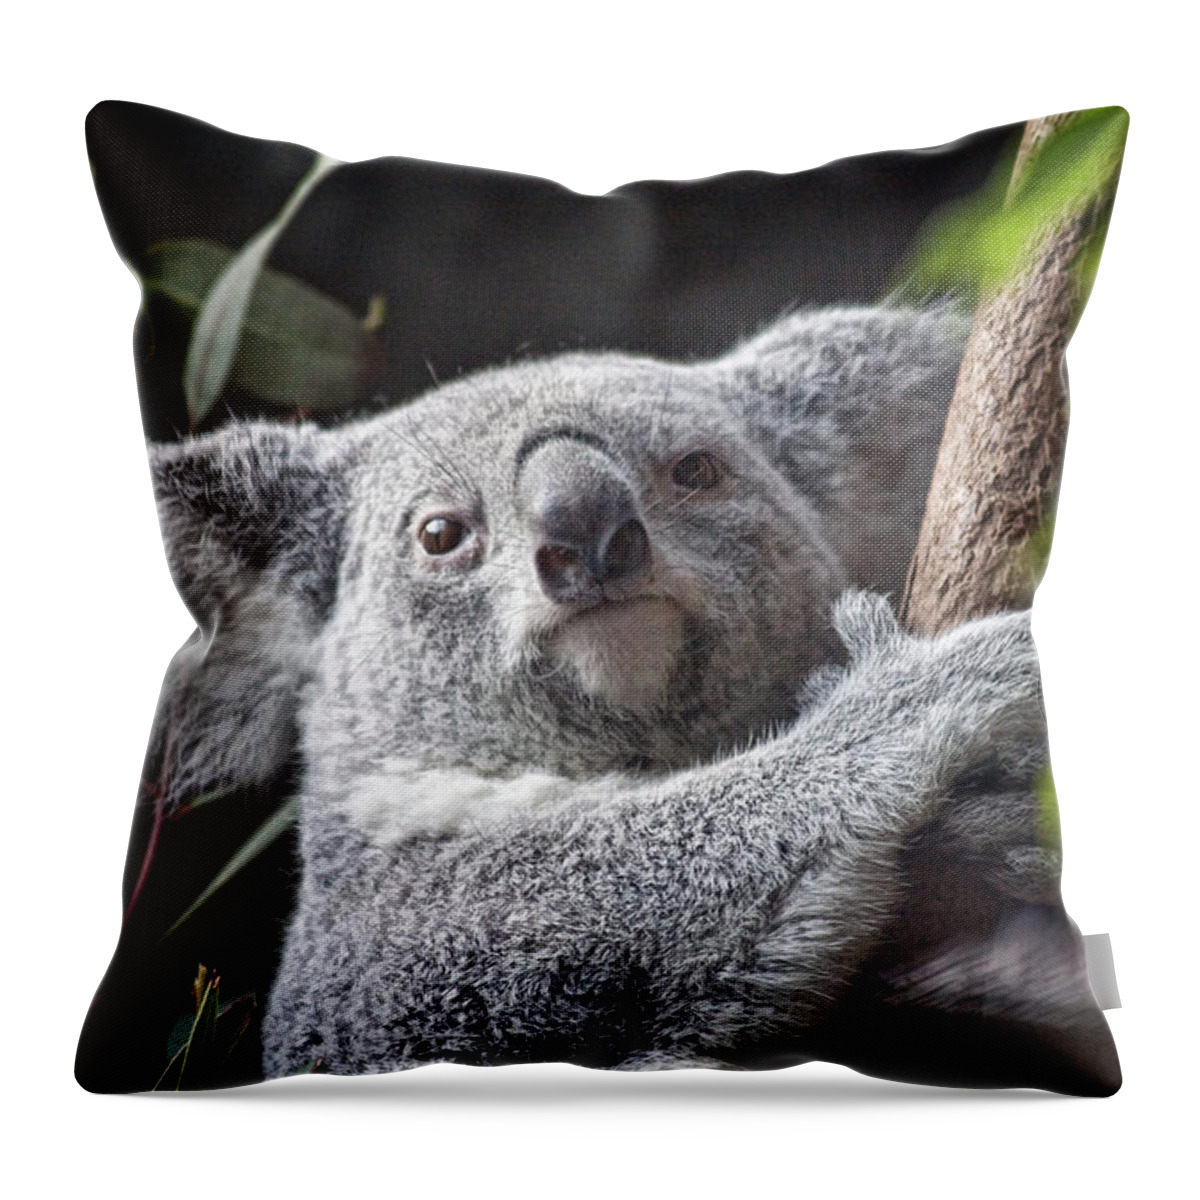 Koala Throw Pillow featuring the photograph Koala Bear by Tom Mc Nemar